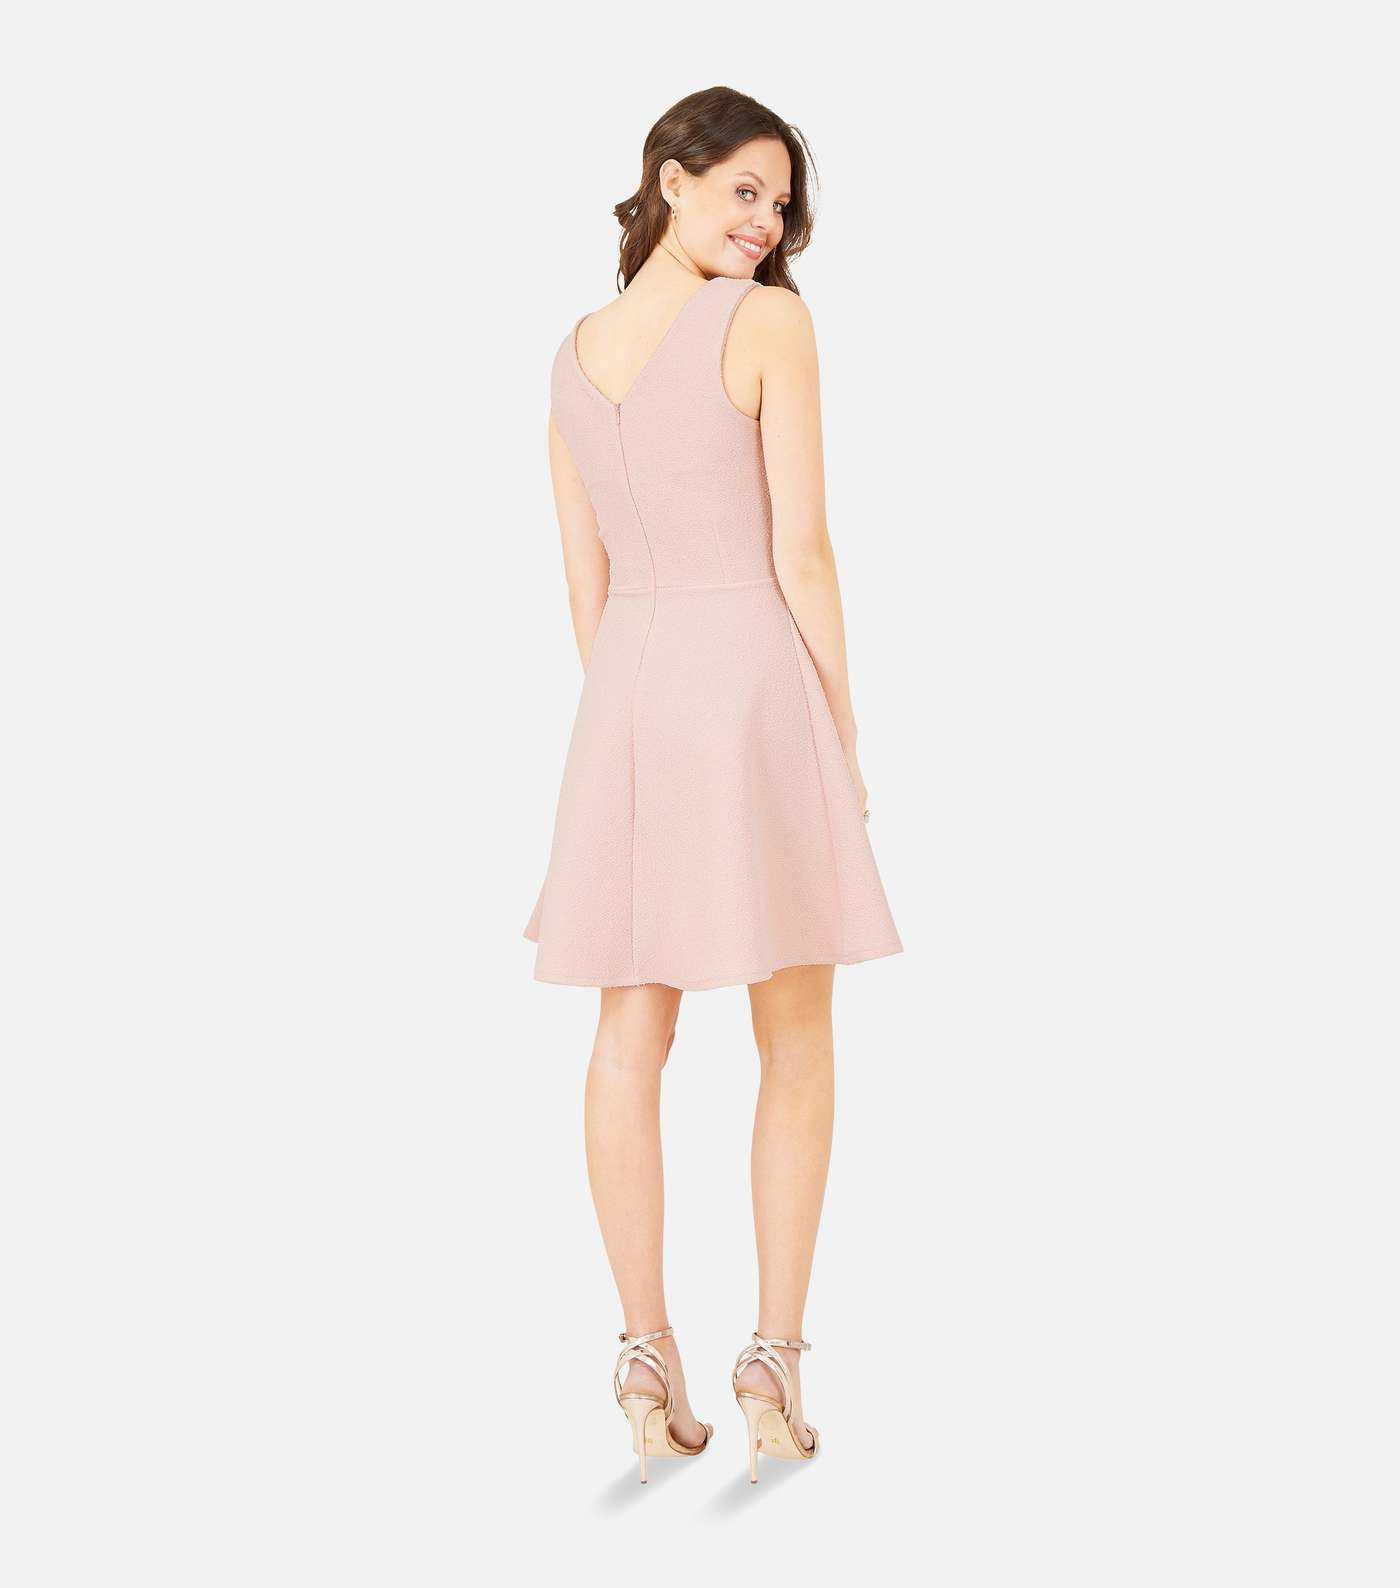 Mela Pink Textured Sleeveless Mini Dress Image 3